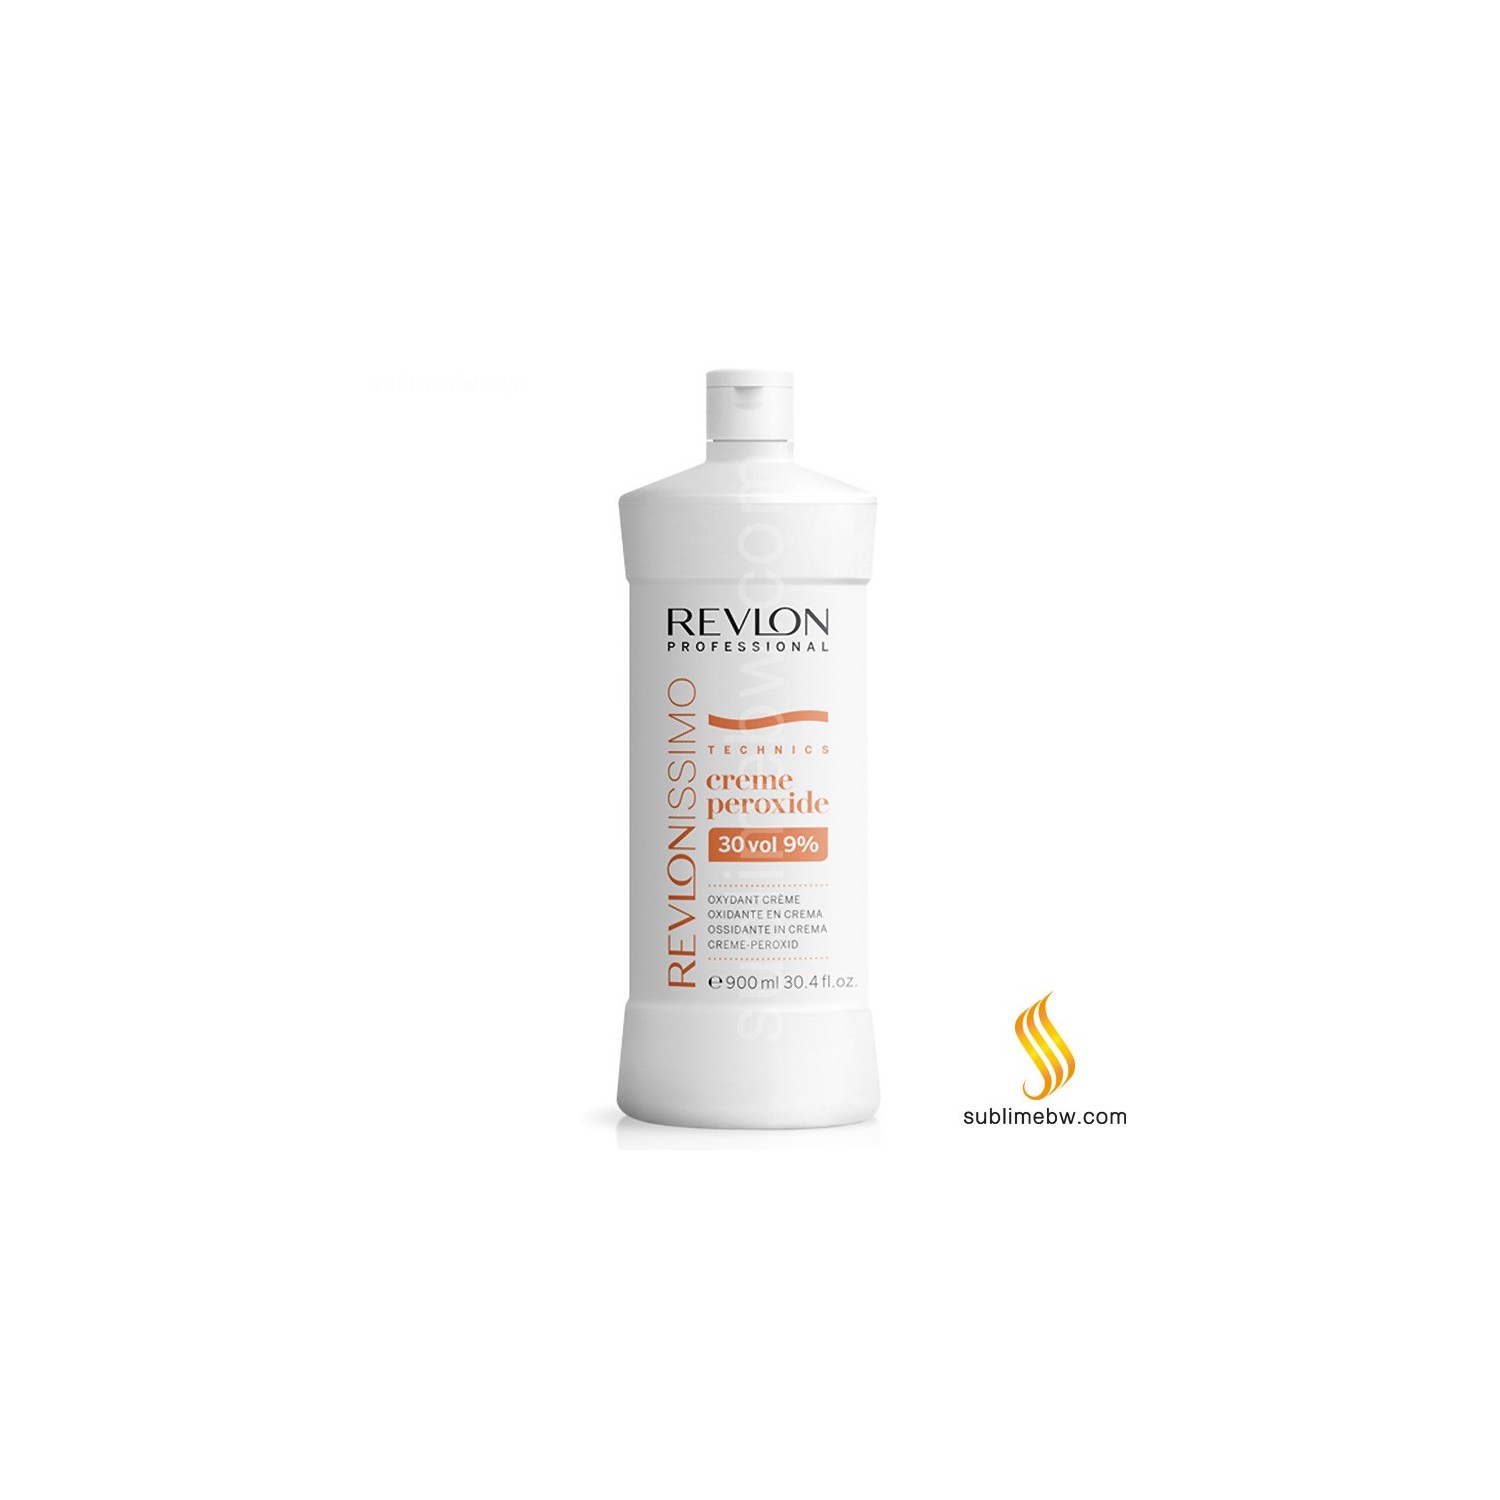 Revlonissimo Cream Peroxide 30vol (9%) 900 Ml